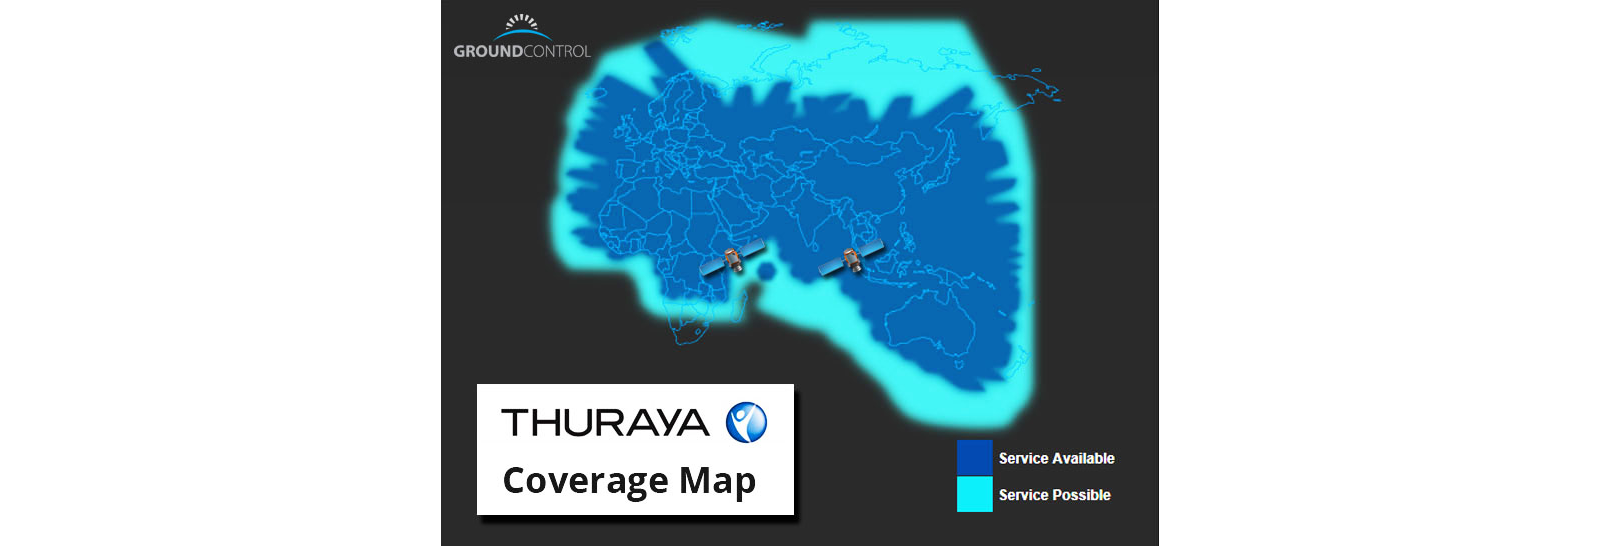 Thuraya_Coverage_Map_Area